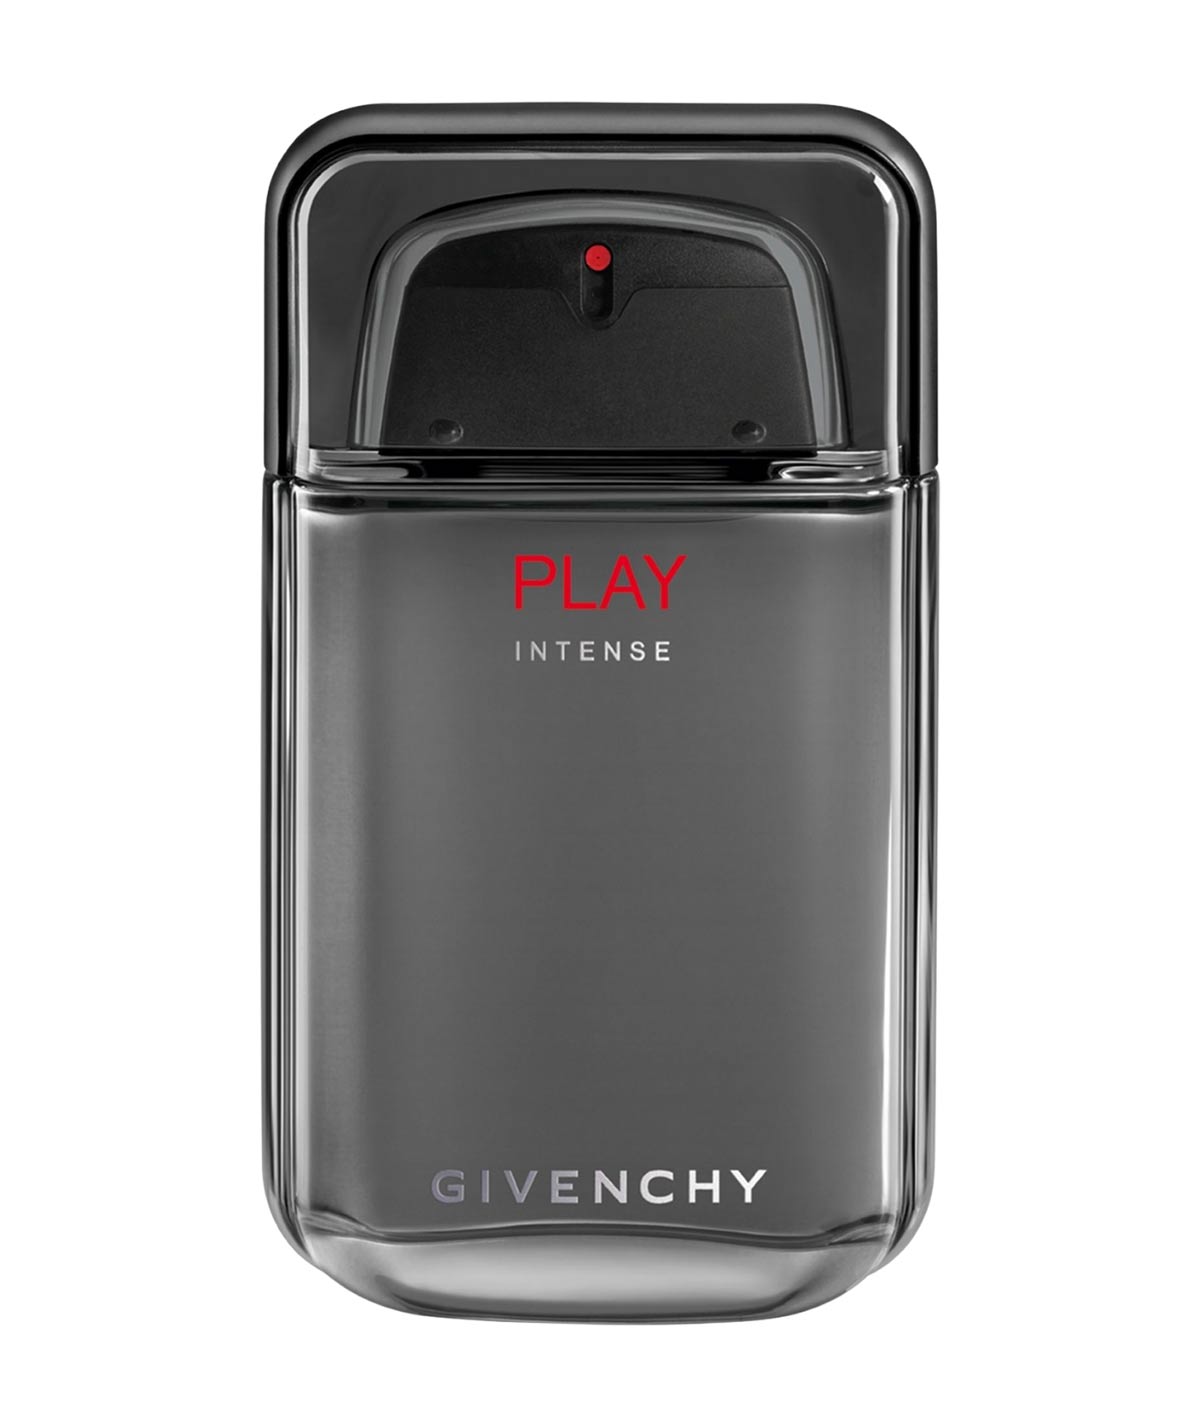 Best Givenchy Cologne - FragranceReview.com